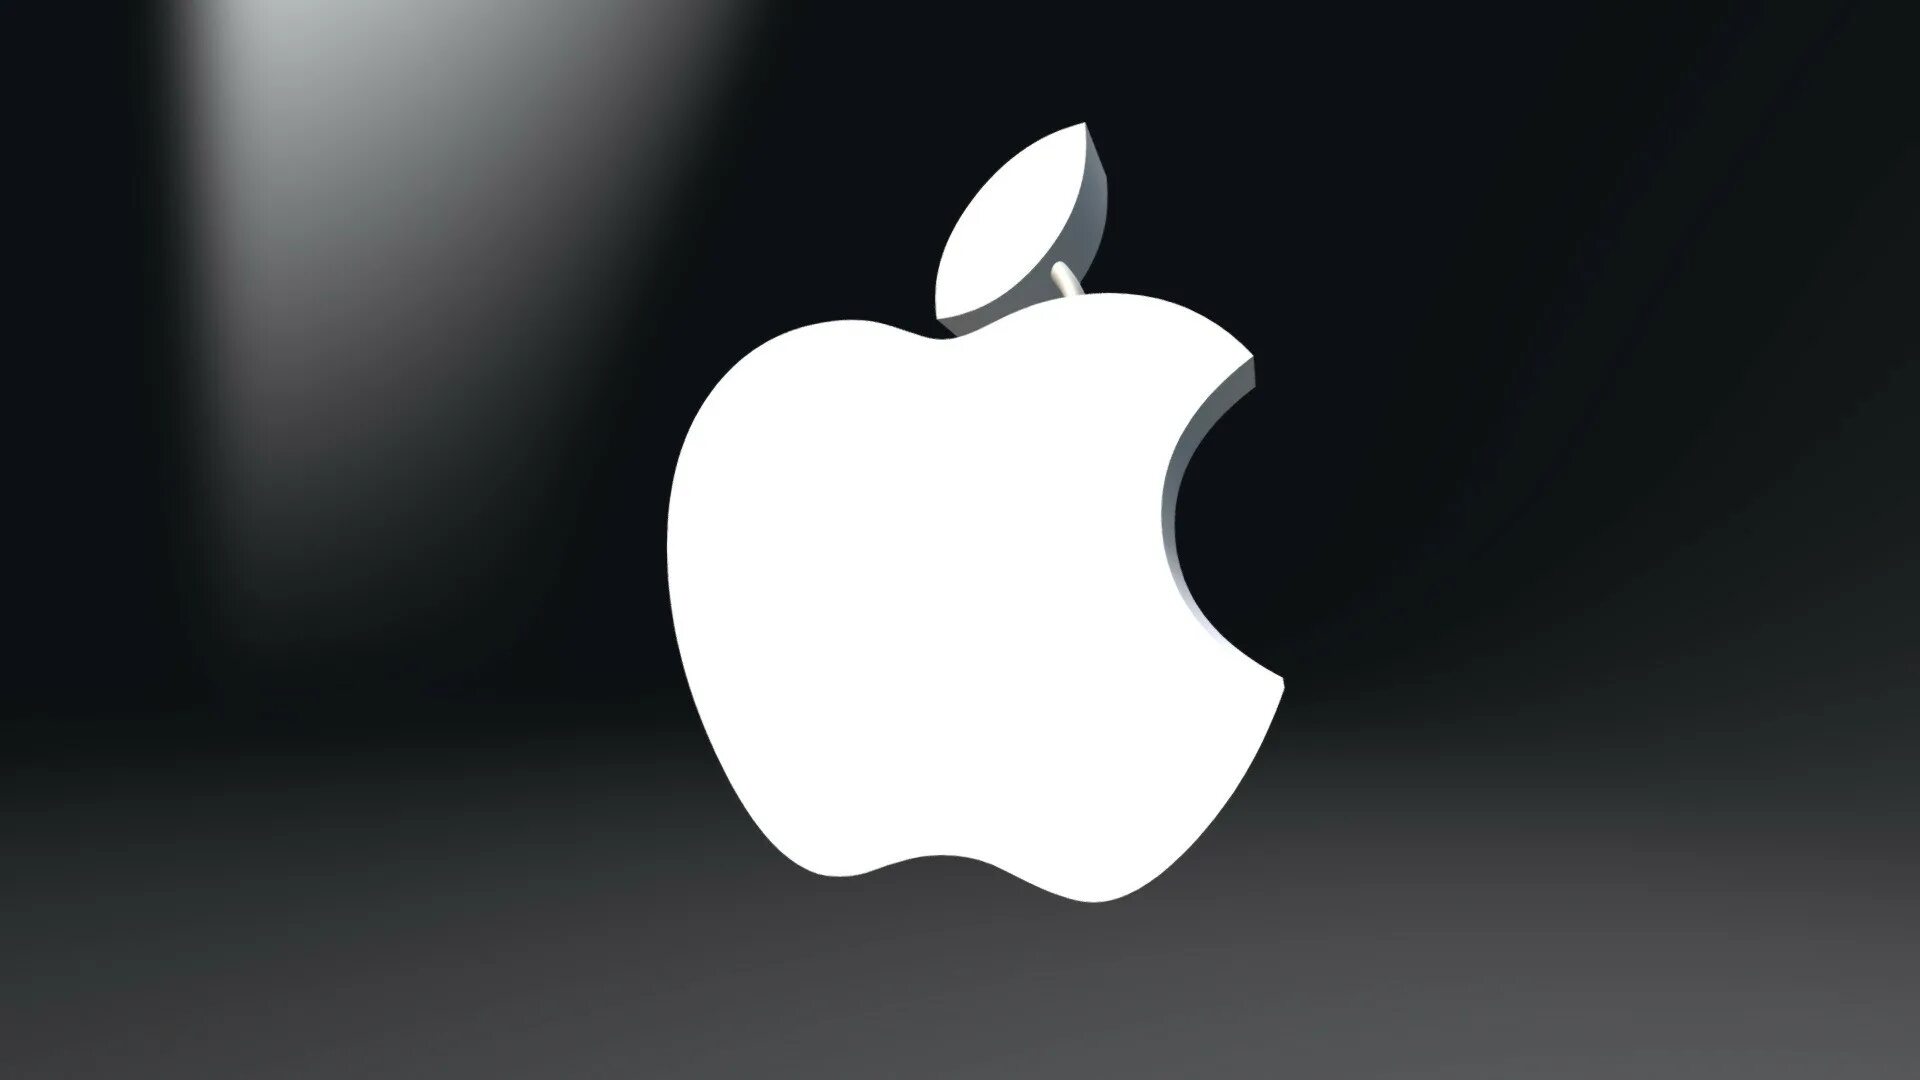 Телефон айфон яблоко. Товарный знак Эппл яблоко. Айфон Аппле логотип. Эпл лого 2021. АПЛ айфон фирма.